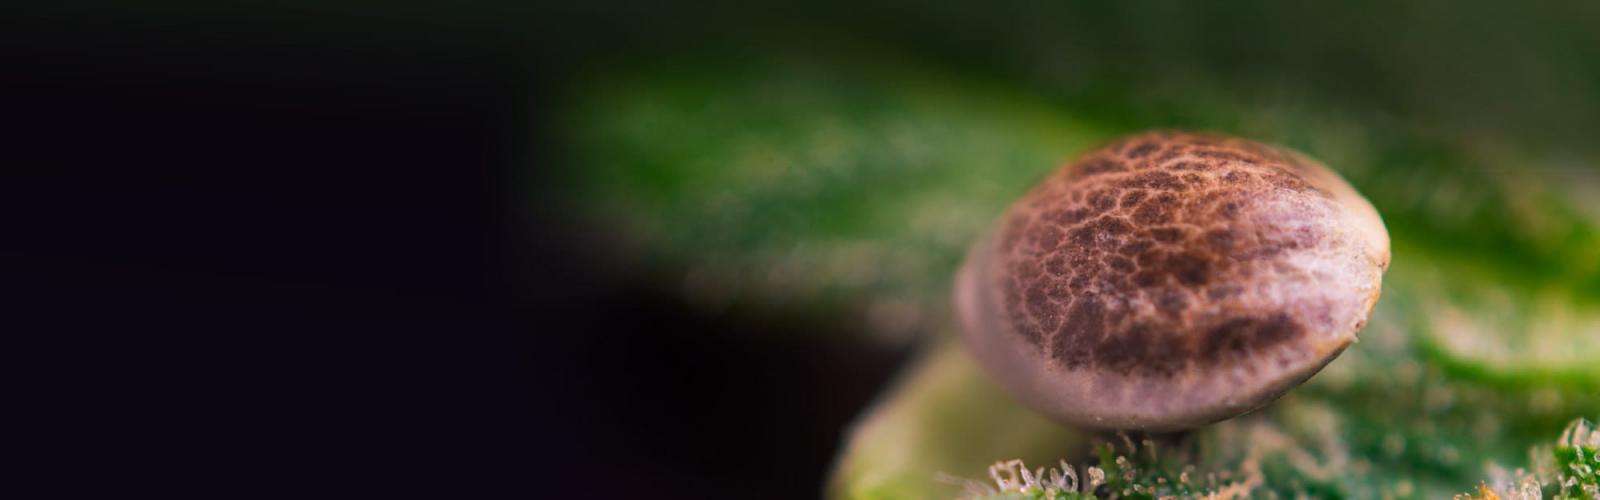 Grass-O-Matic Cannabis Seeds